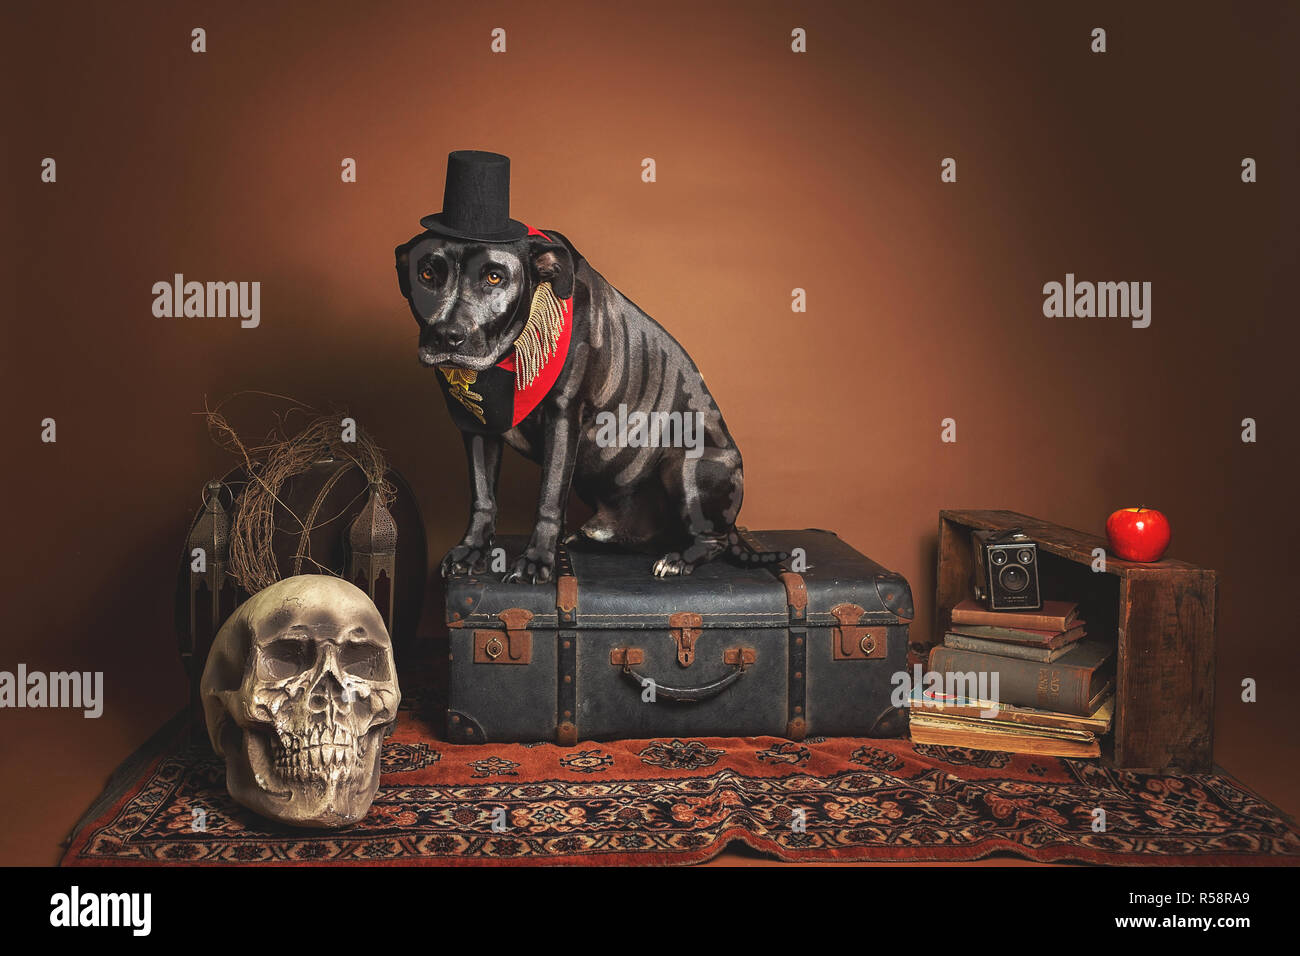 Halloween spooky cani dress up Foto Stock